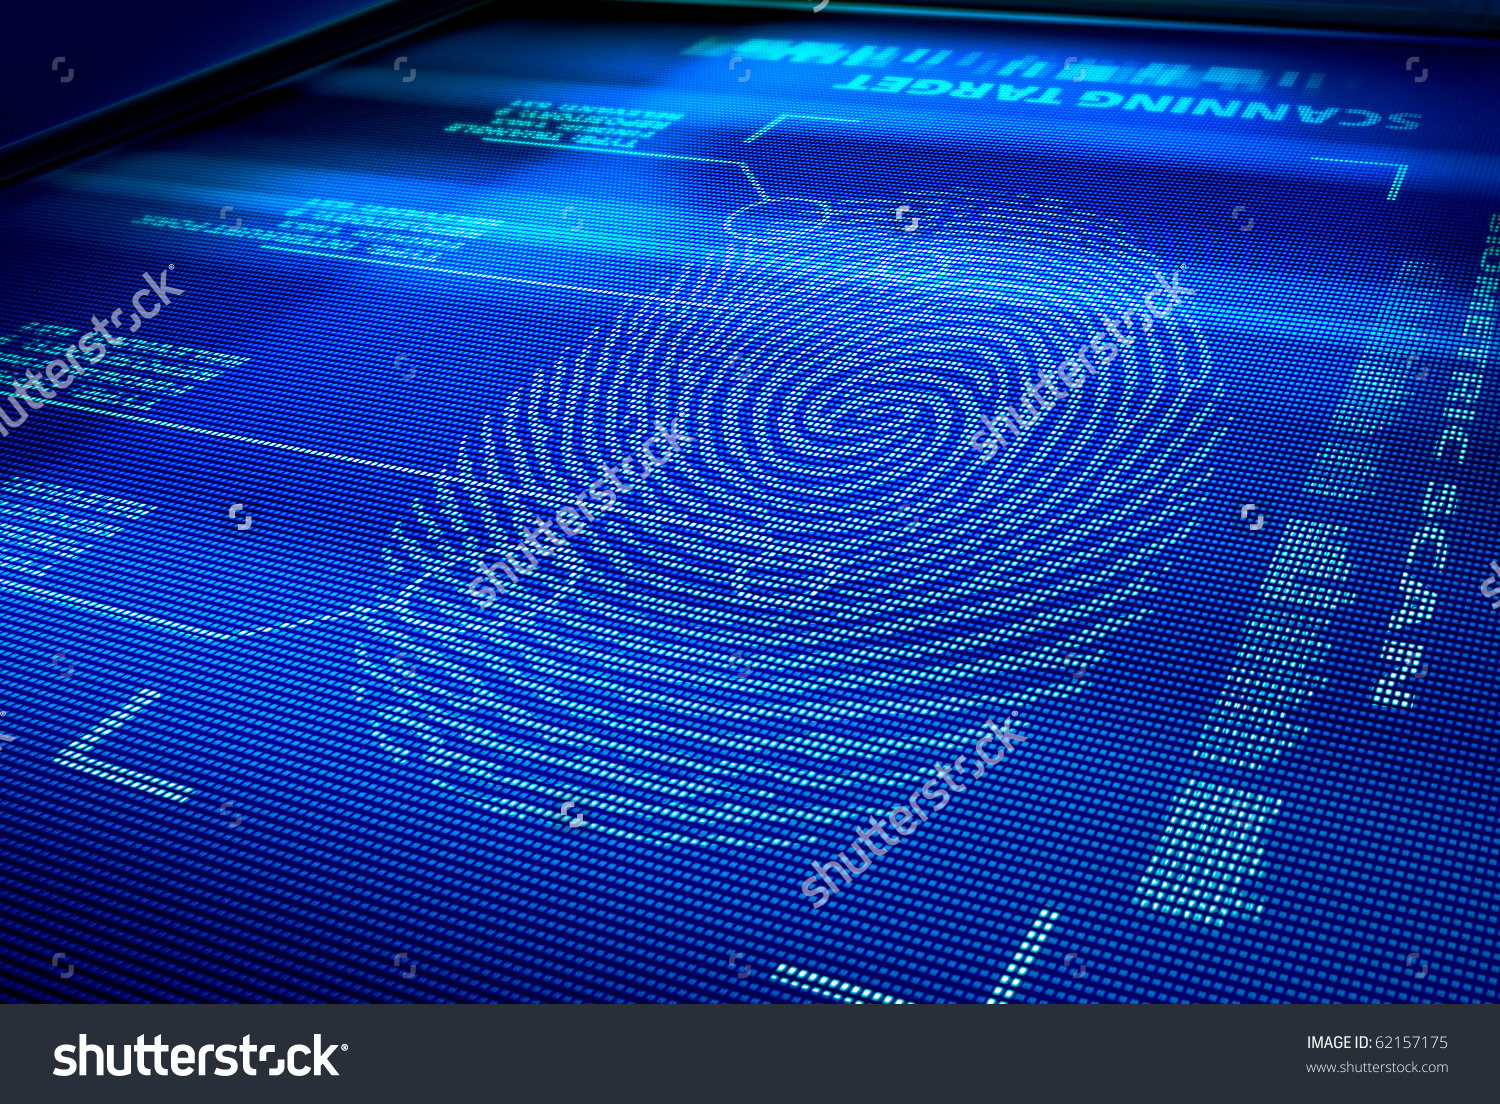 device tech fingerprint stock-photo-identification-system-scanning-human-fingerprint-62157175